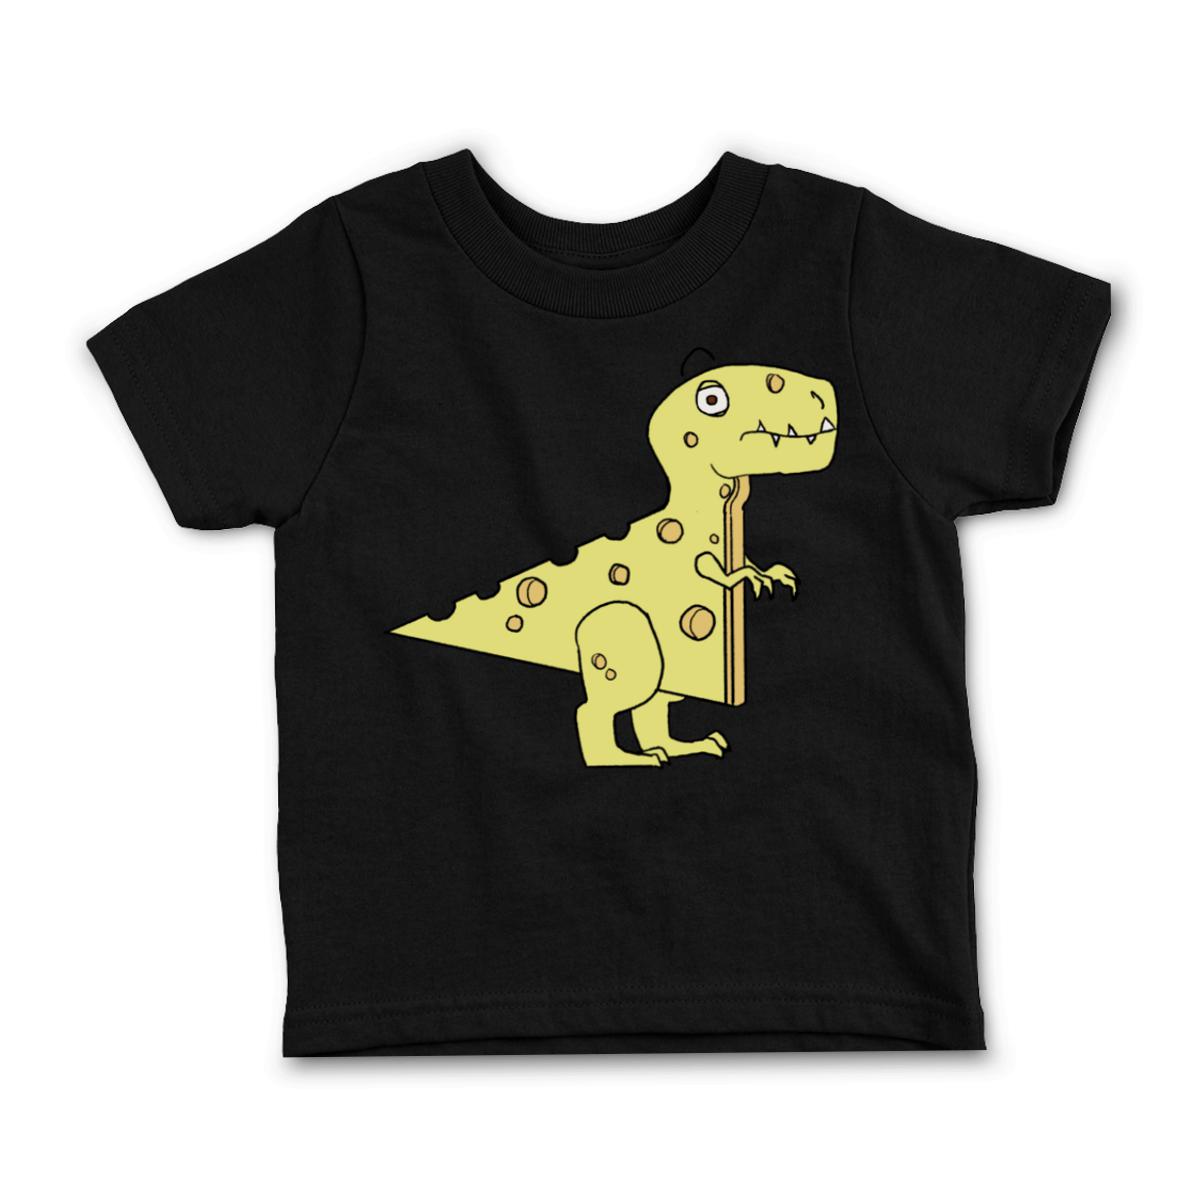 Cheeseosaurus Rex Toddler Tee 56T black